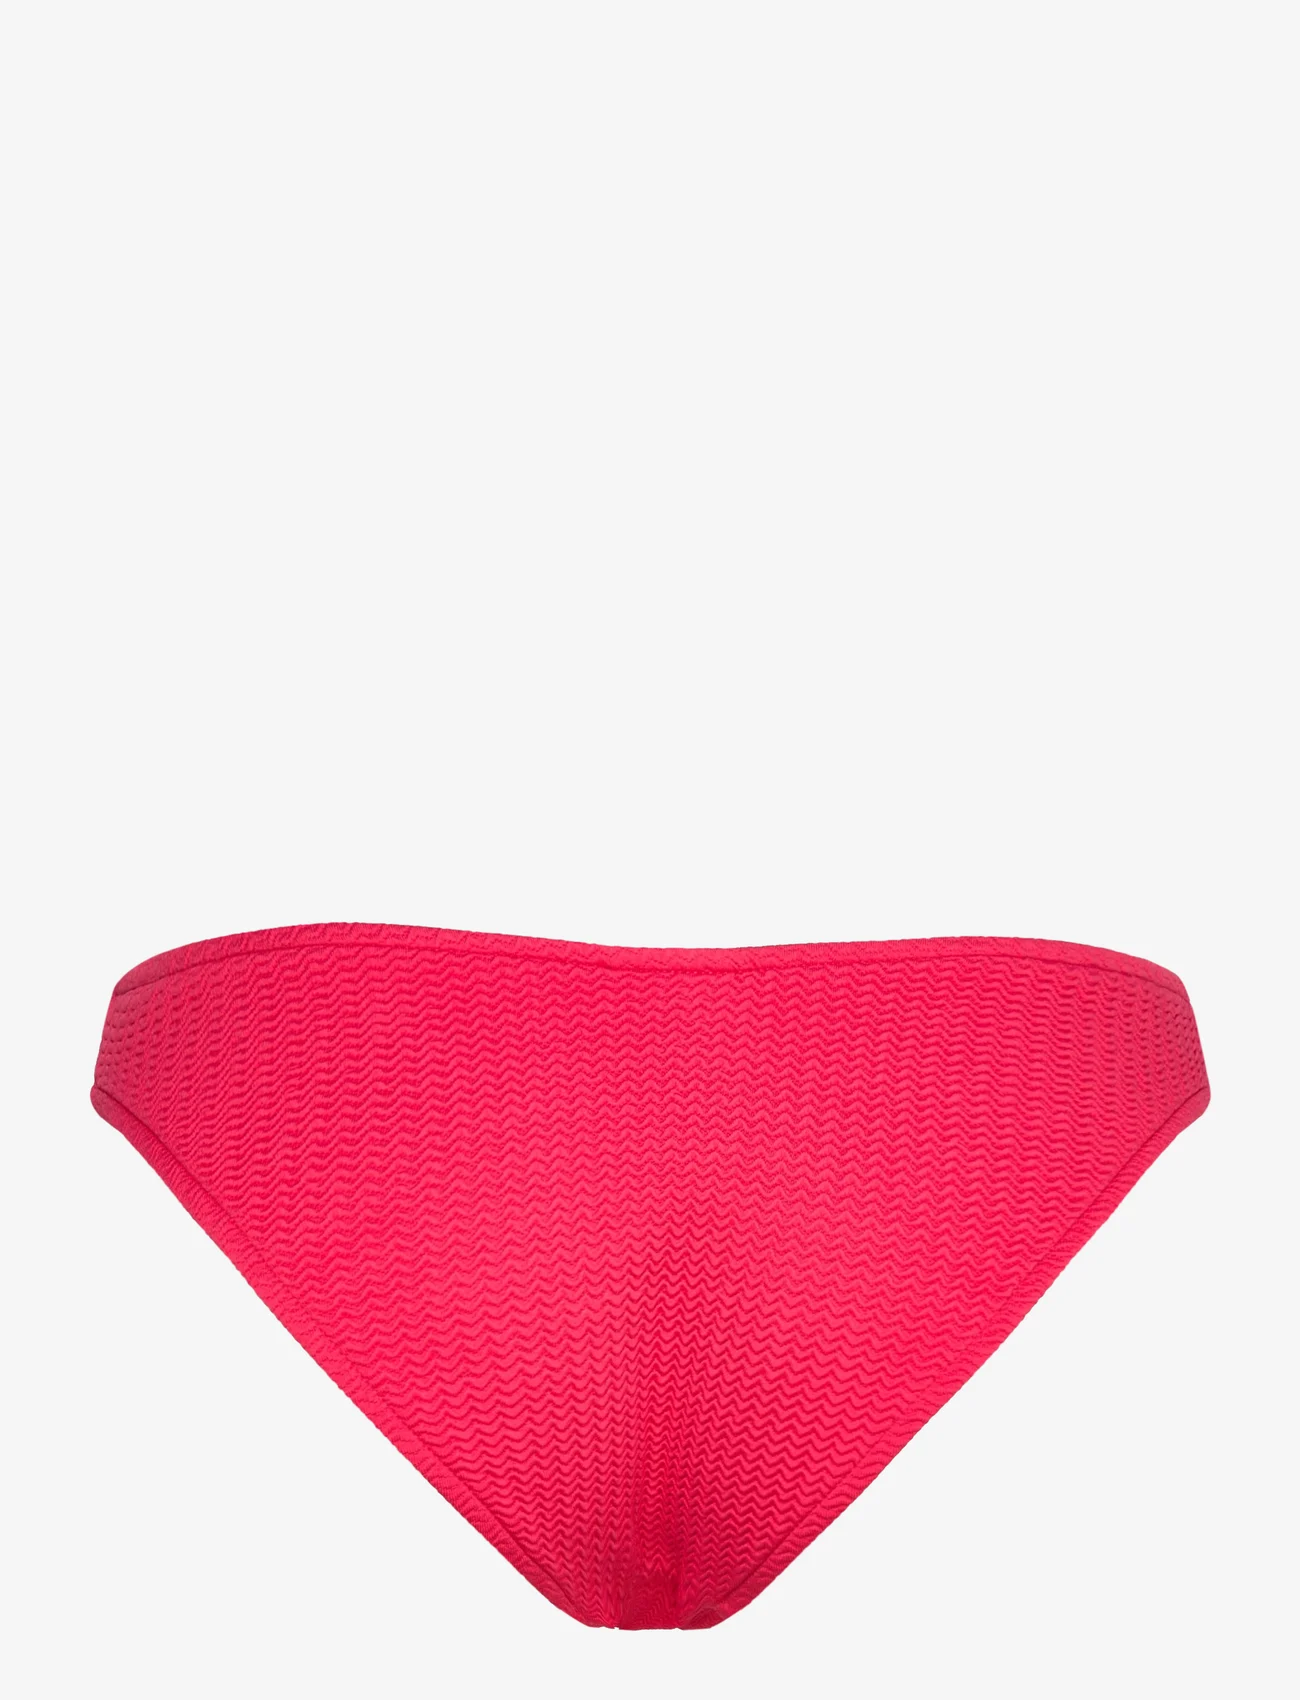 Seafolly - SeaDive High Cut Pant - bikinibriefs - chilli red - 1